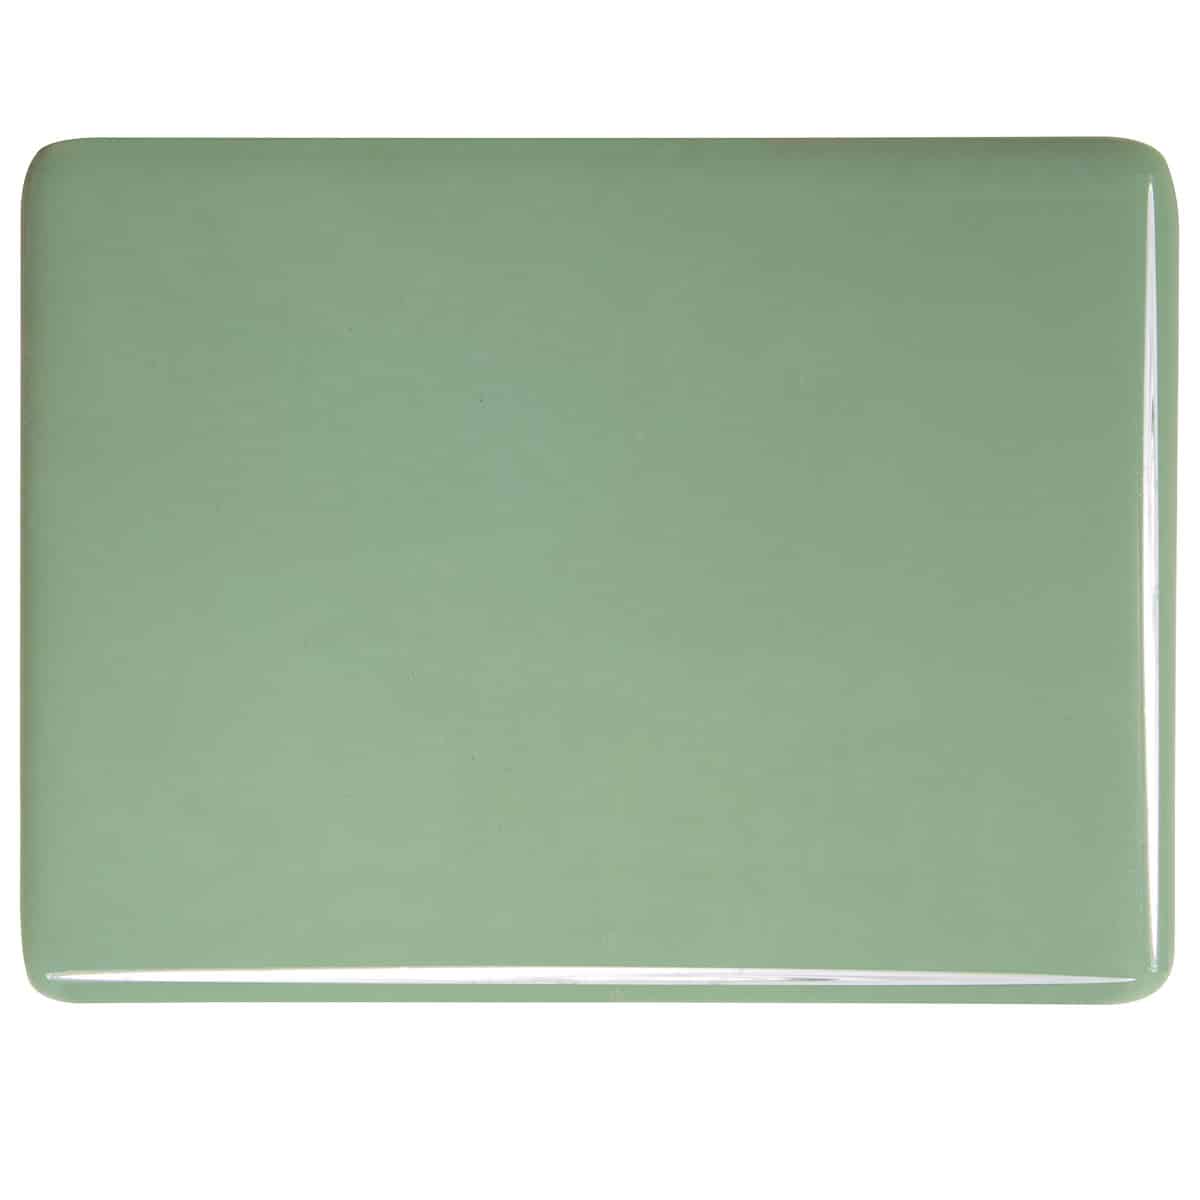 Celadon Green Opal sheet glass swatch